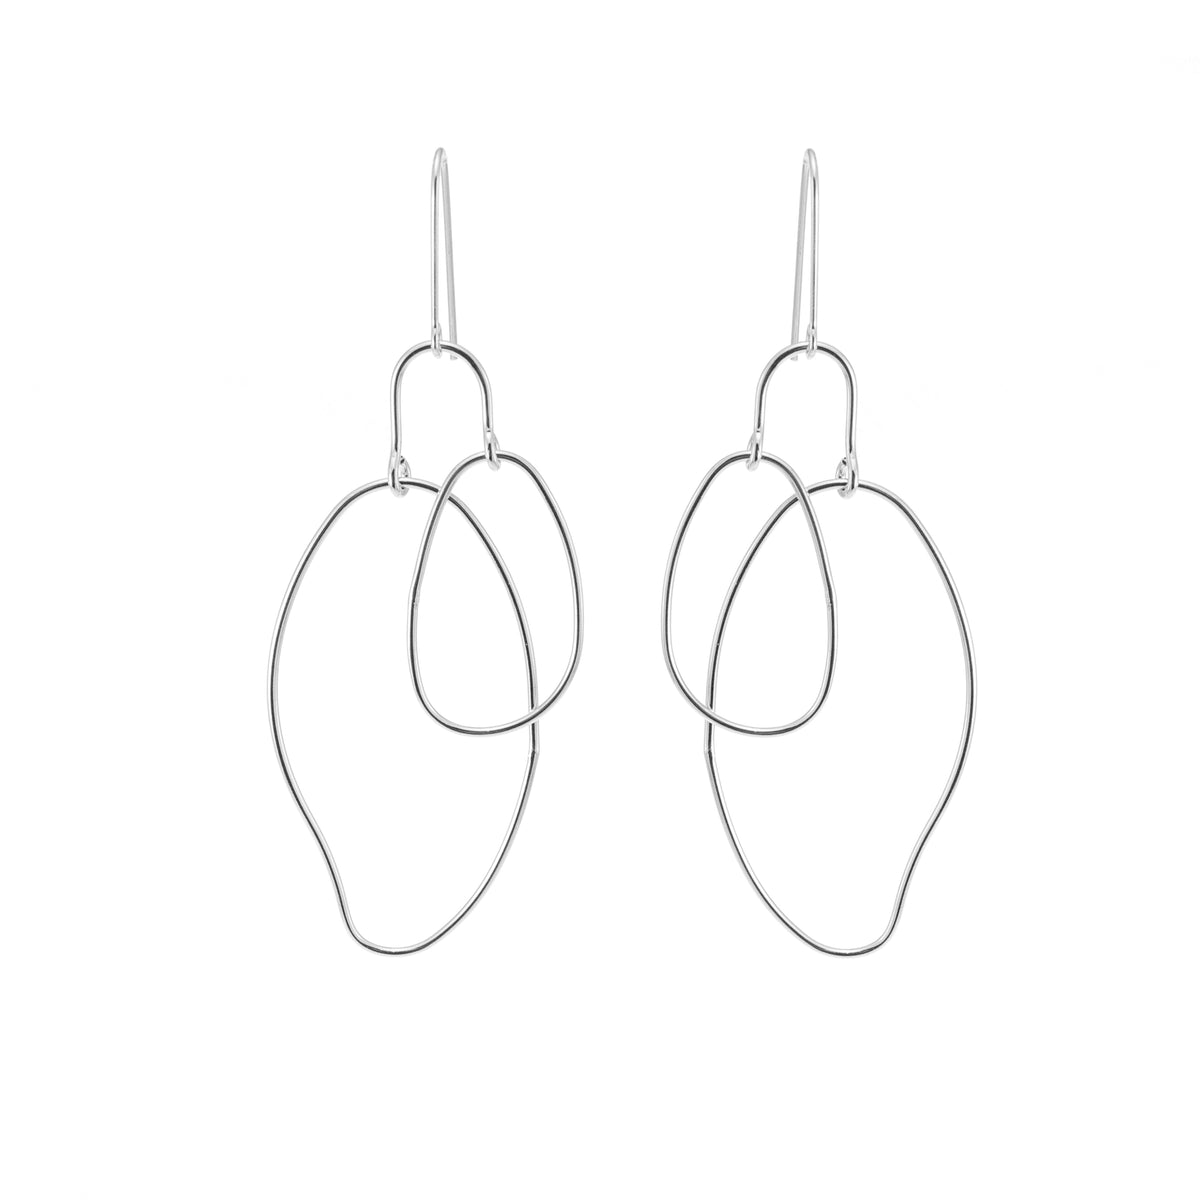 Merx fashion jewellery earrings rhodium plated 